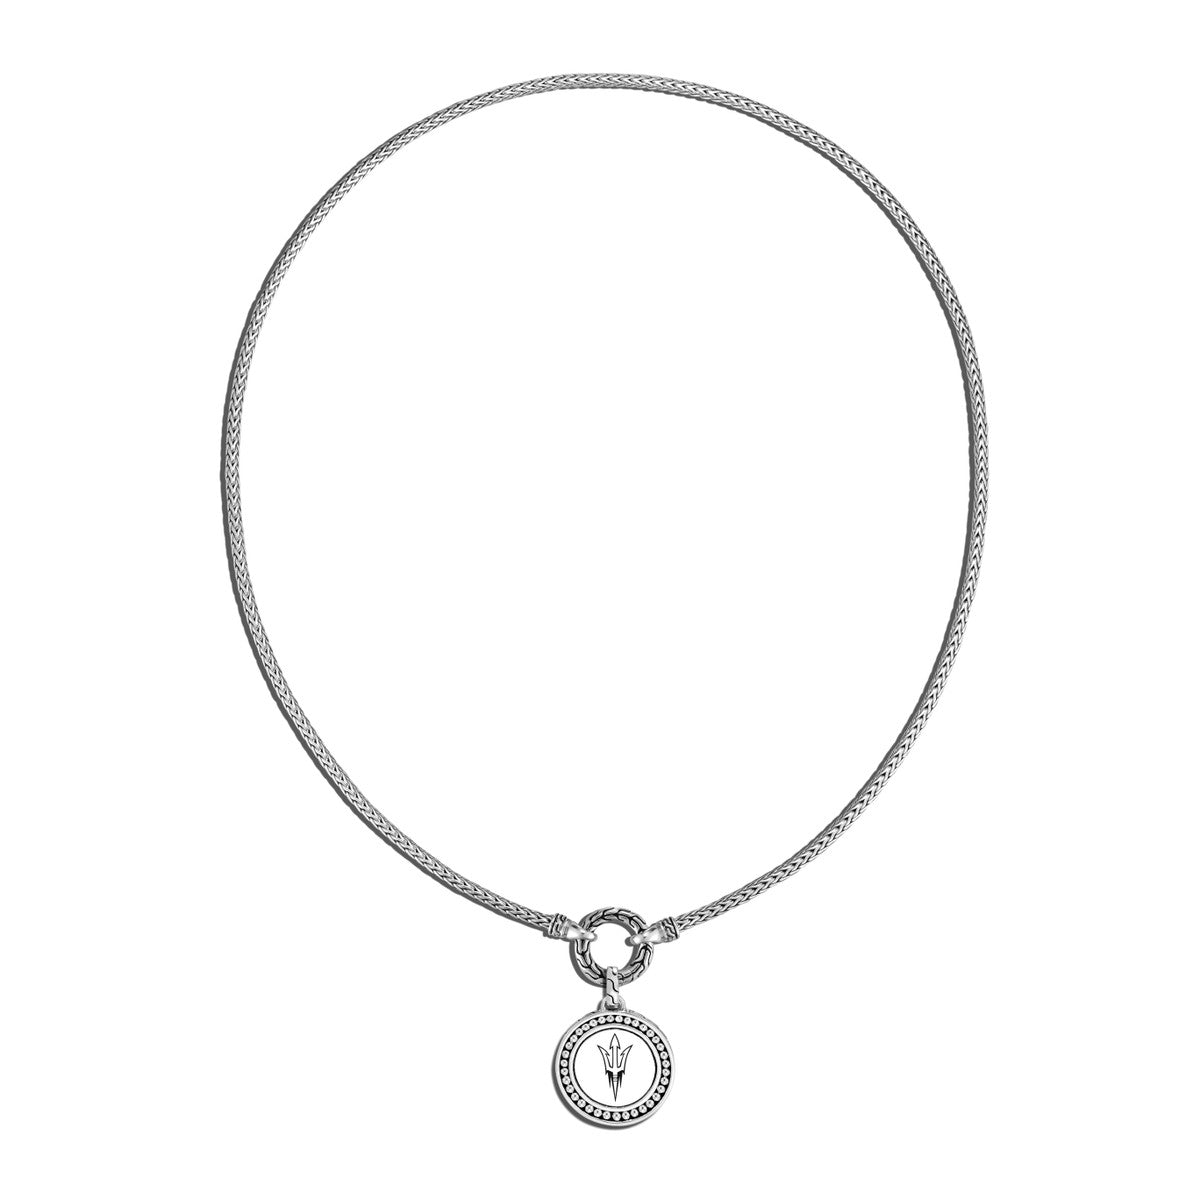 ASU Jewelry - Charms, Bracelets, Necklaces. Personalized | M 